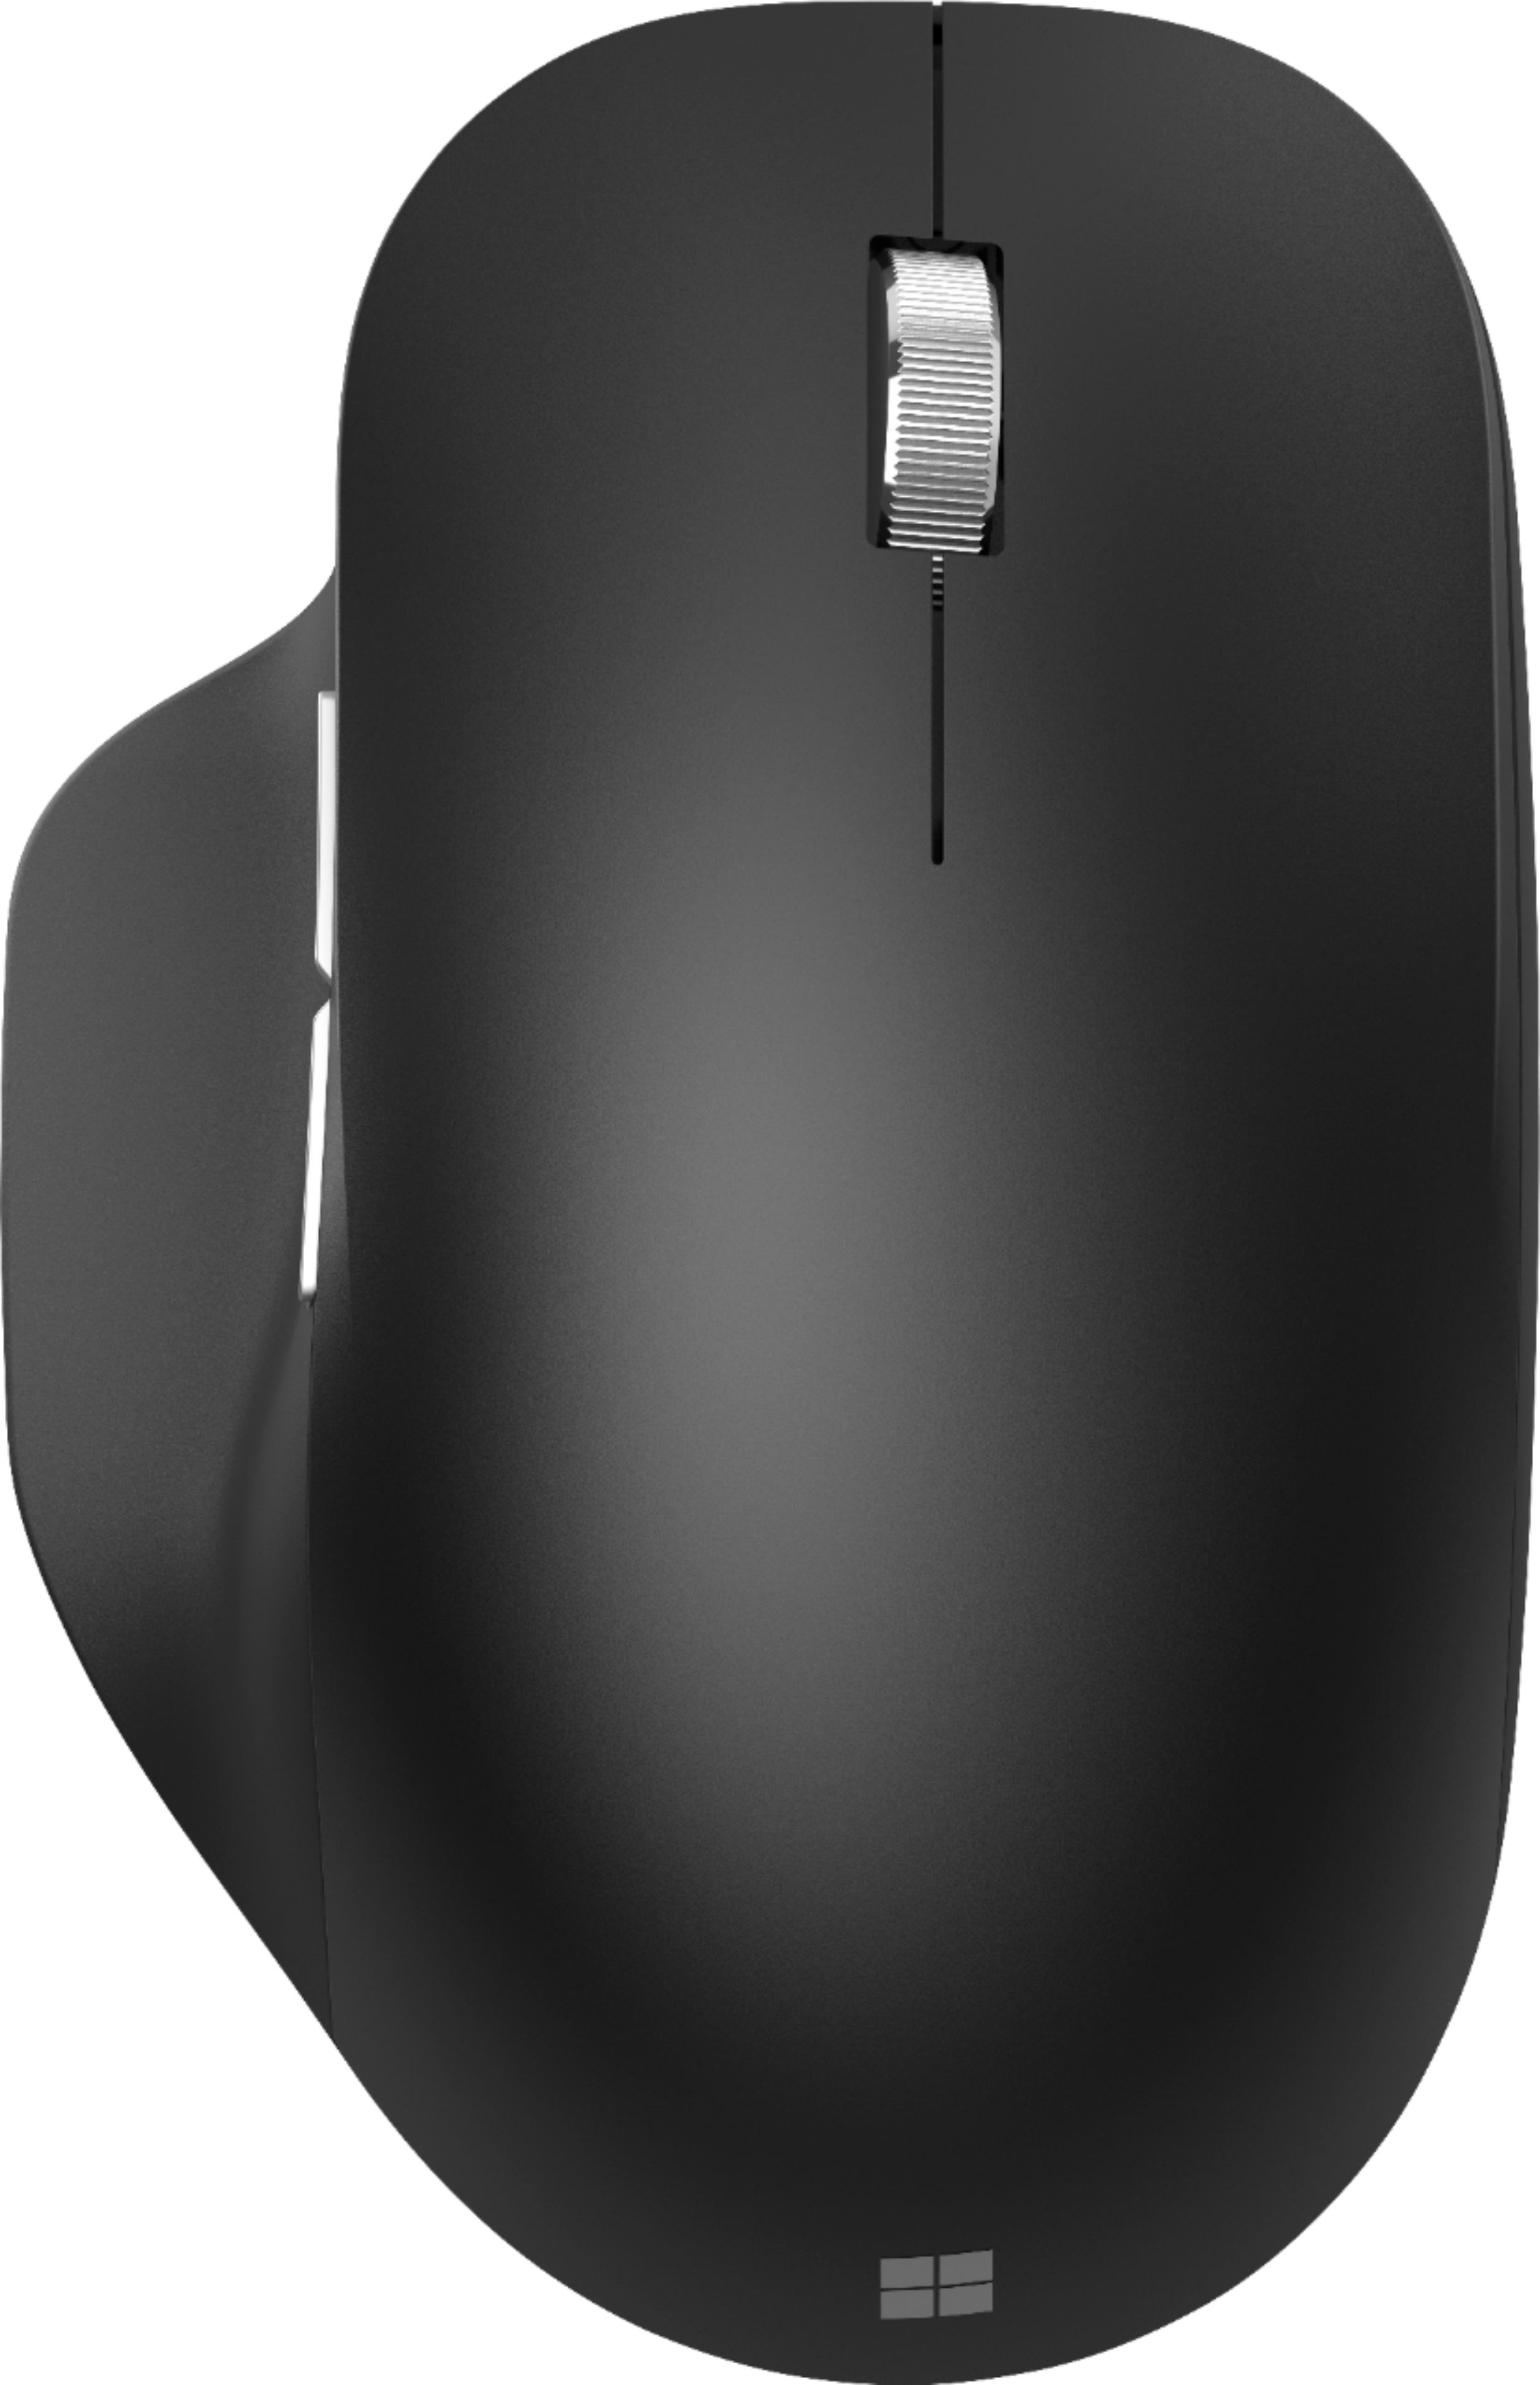 Microsoft Bluetooth Ergonomic Mouse - All Colors - $29.99